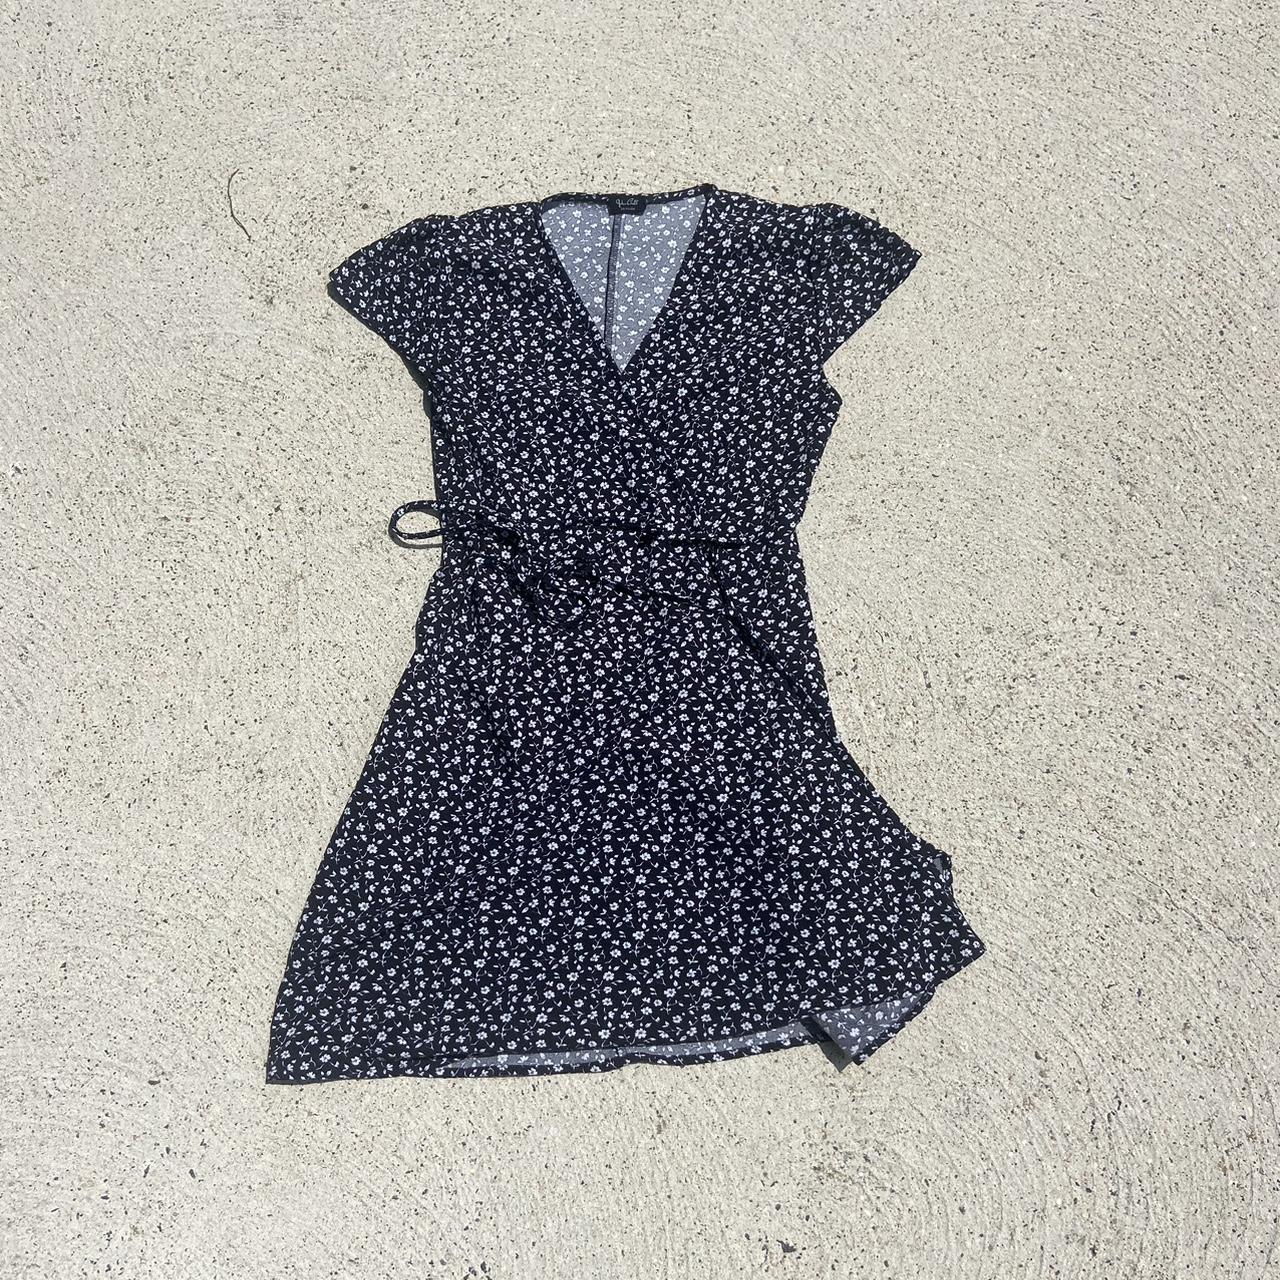 Brandy Melville wrap dress!! Not sold in stores - Depop